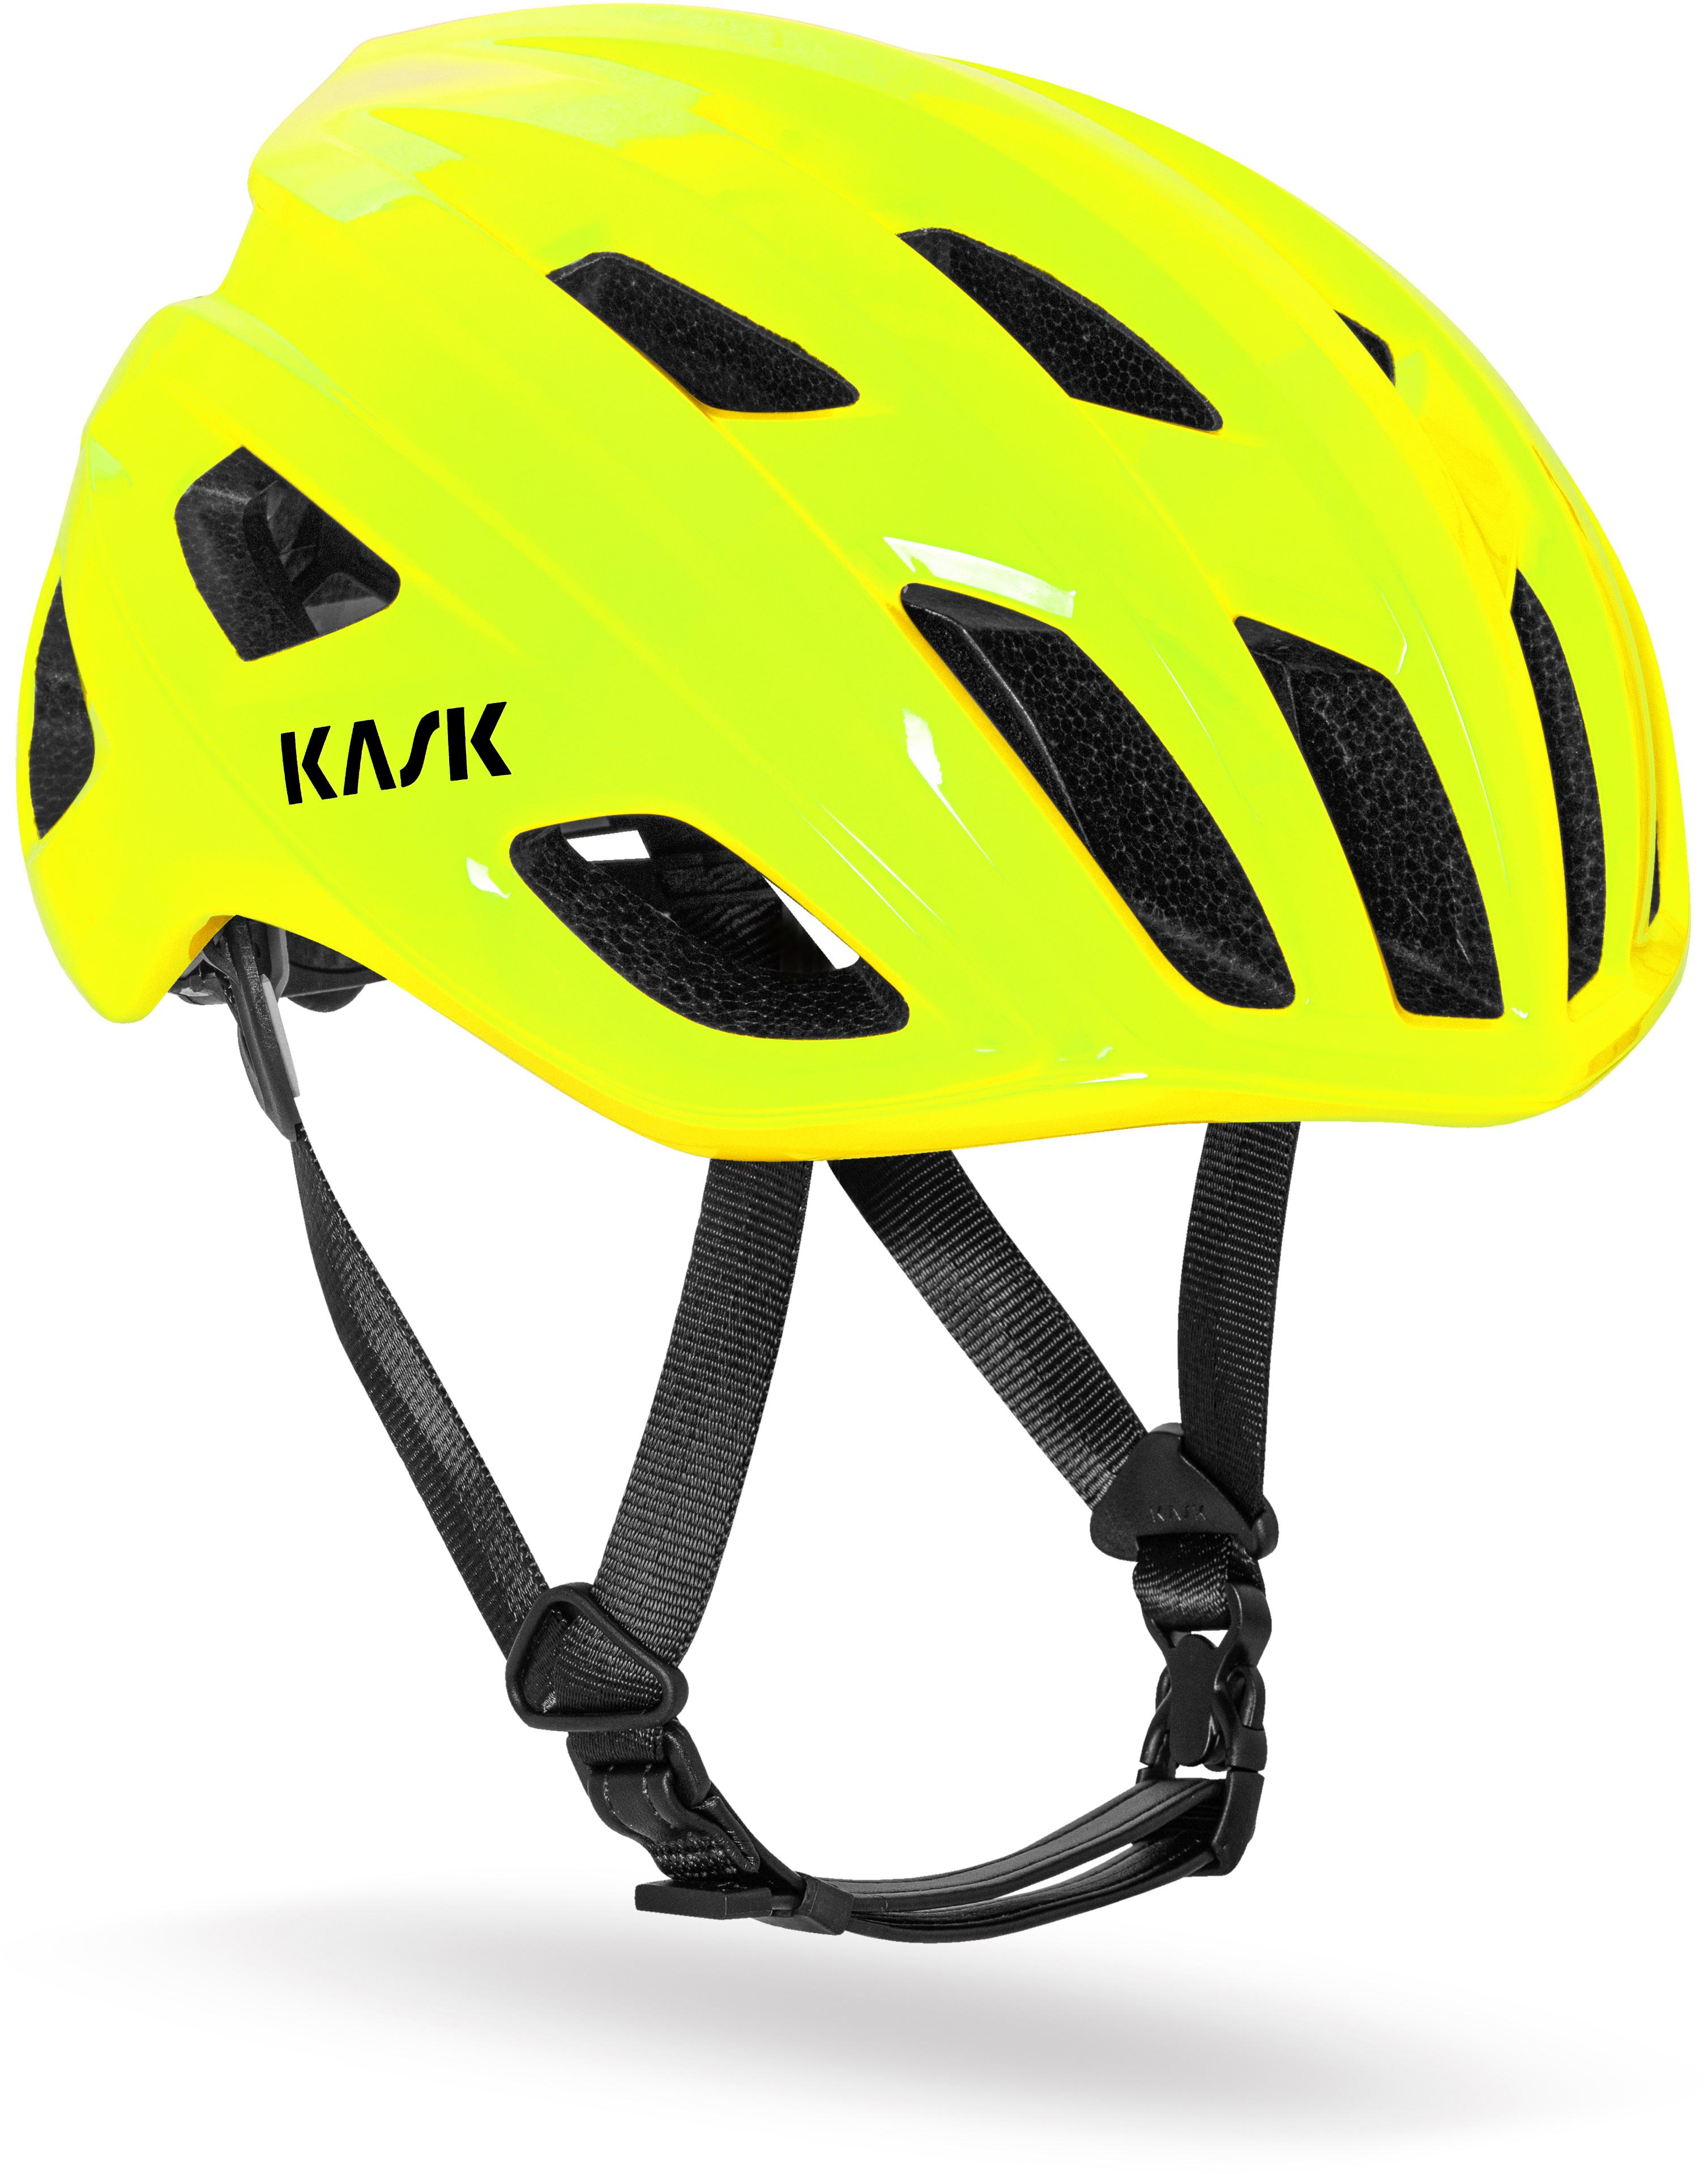 Kask Mojito Wg11 Road Helmet Yellow Fluo, Small